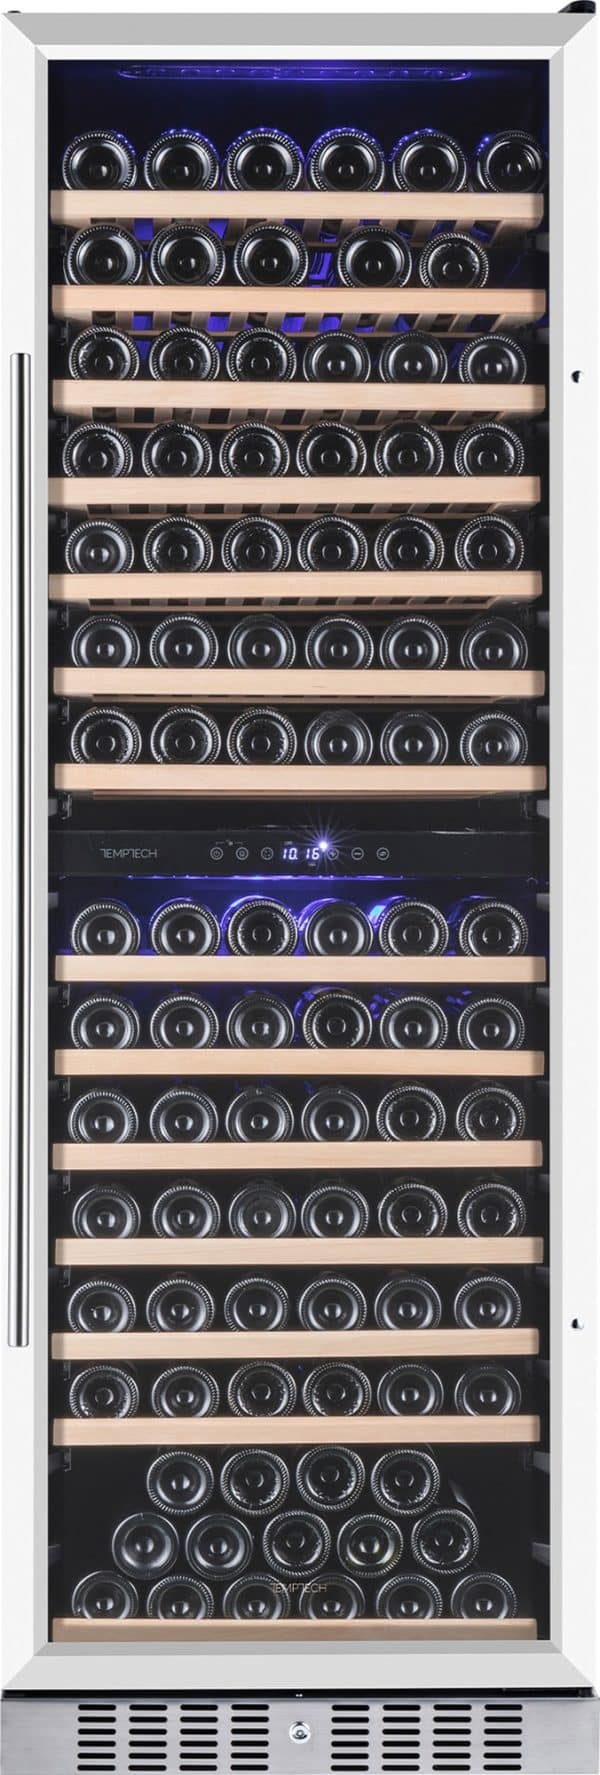 Temptech Premium vinkøleskab WP180DCS (rustfri stål)